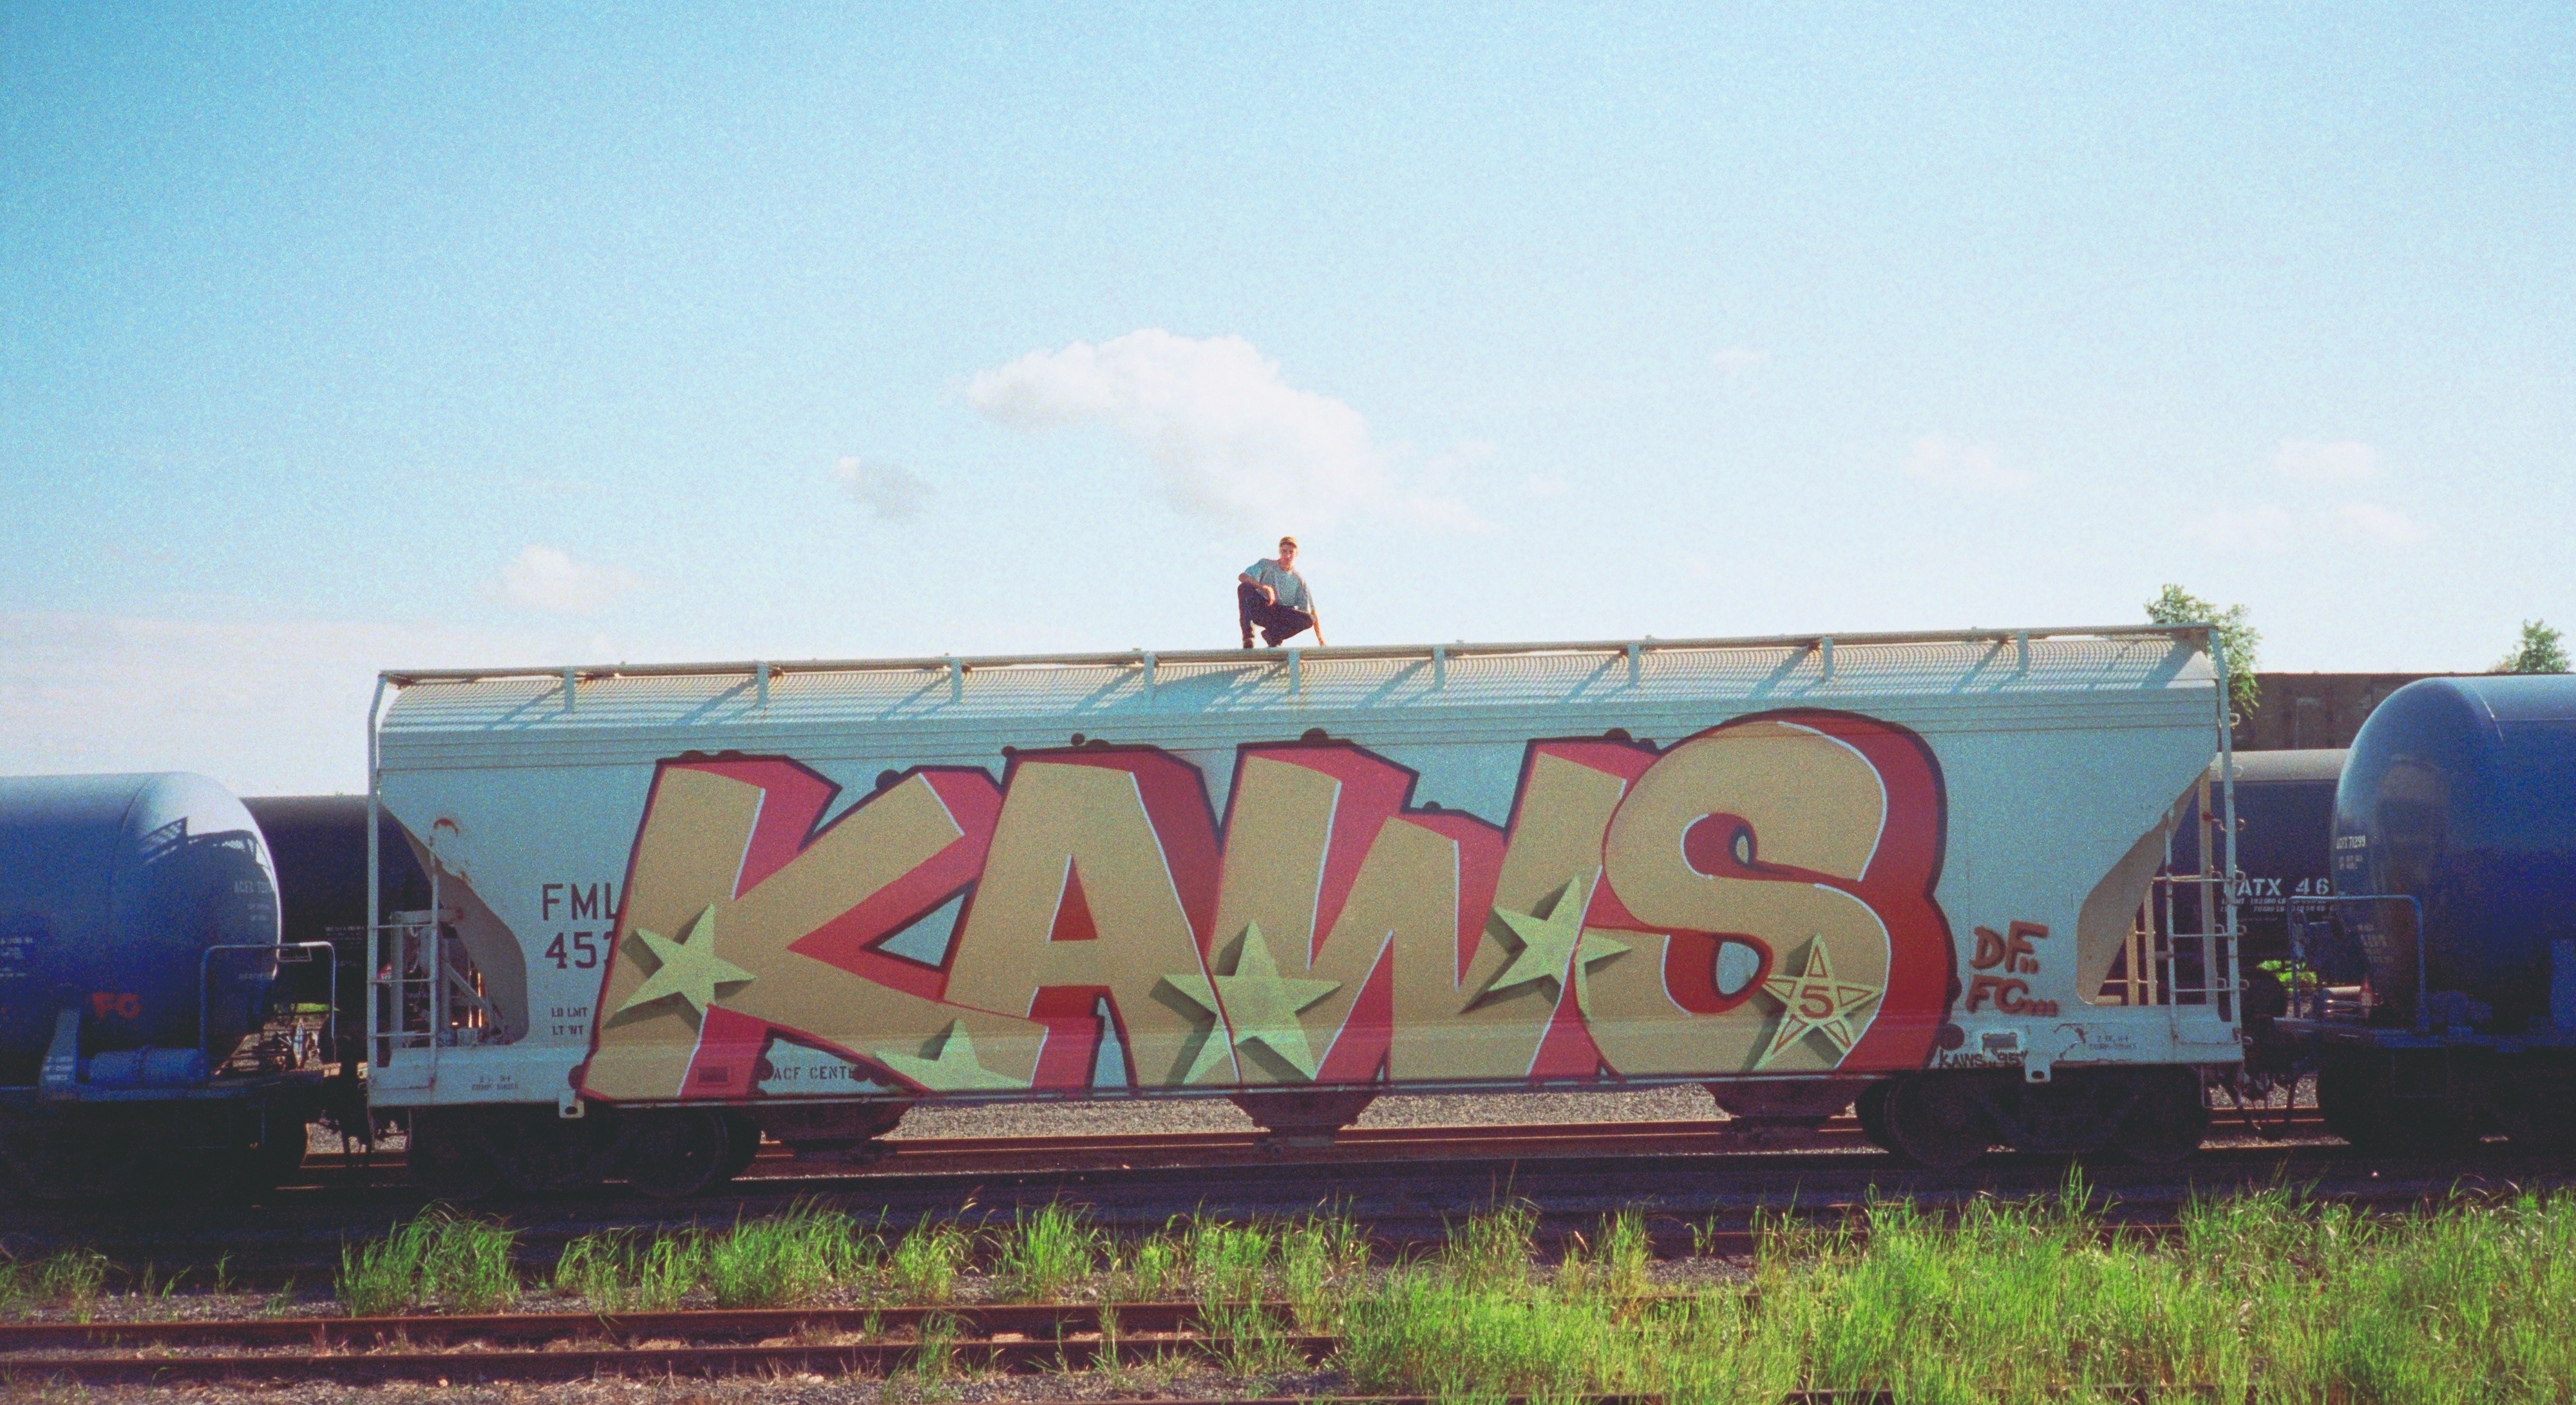 kaws graffiti train